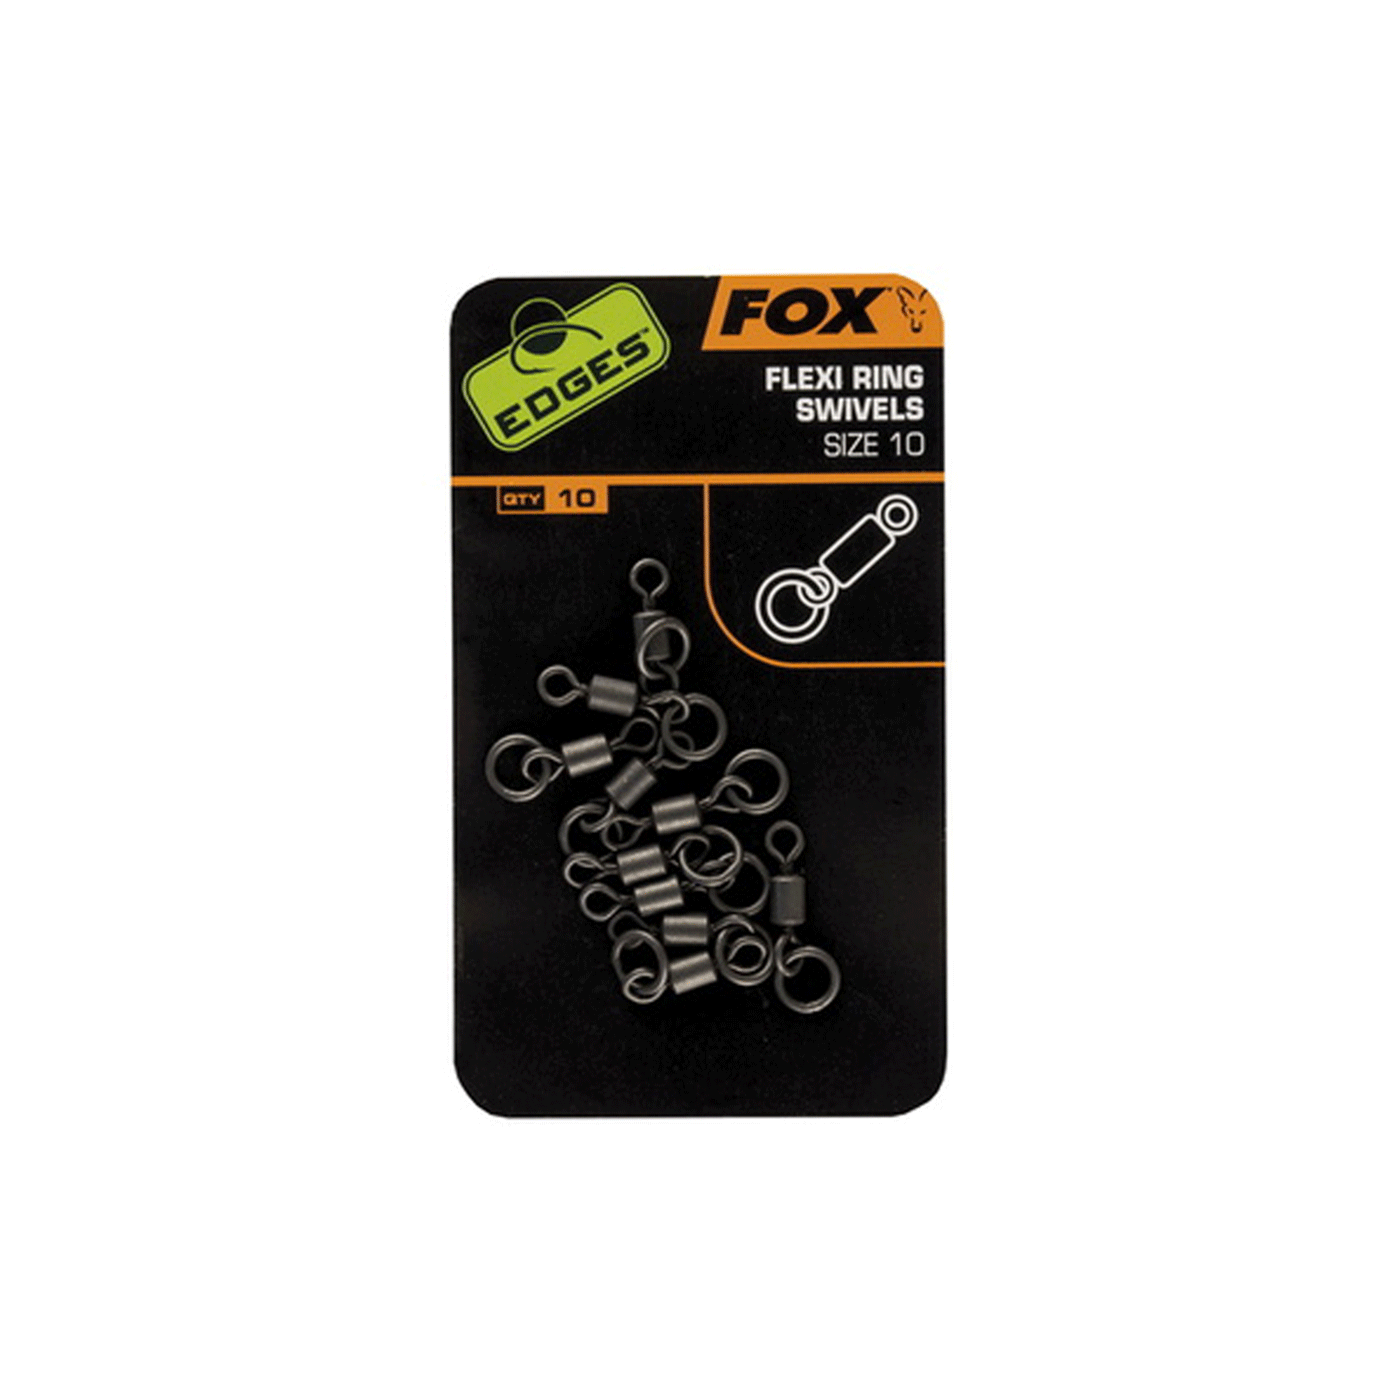 FOX - EDGES™ FLEXI RING SWIVELS SIZE 7 (10PCS)